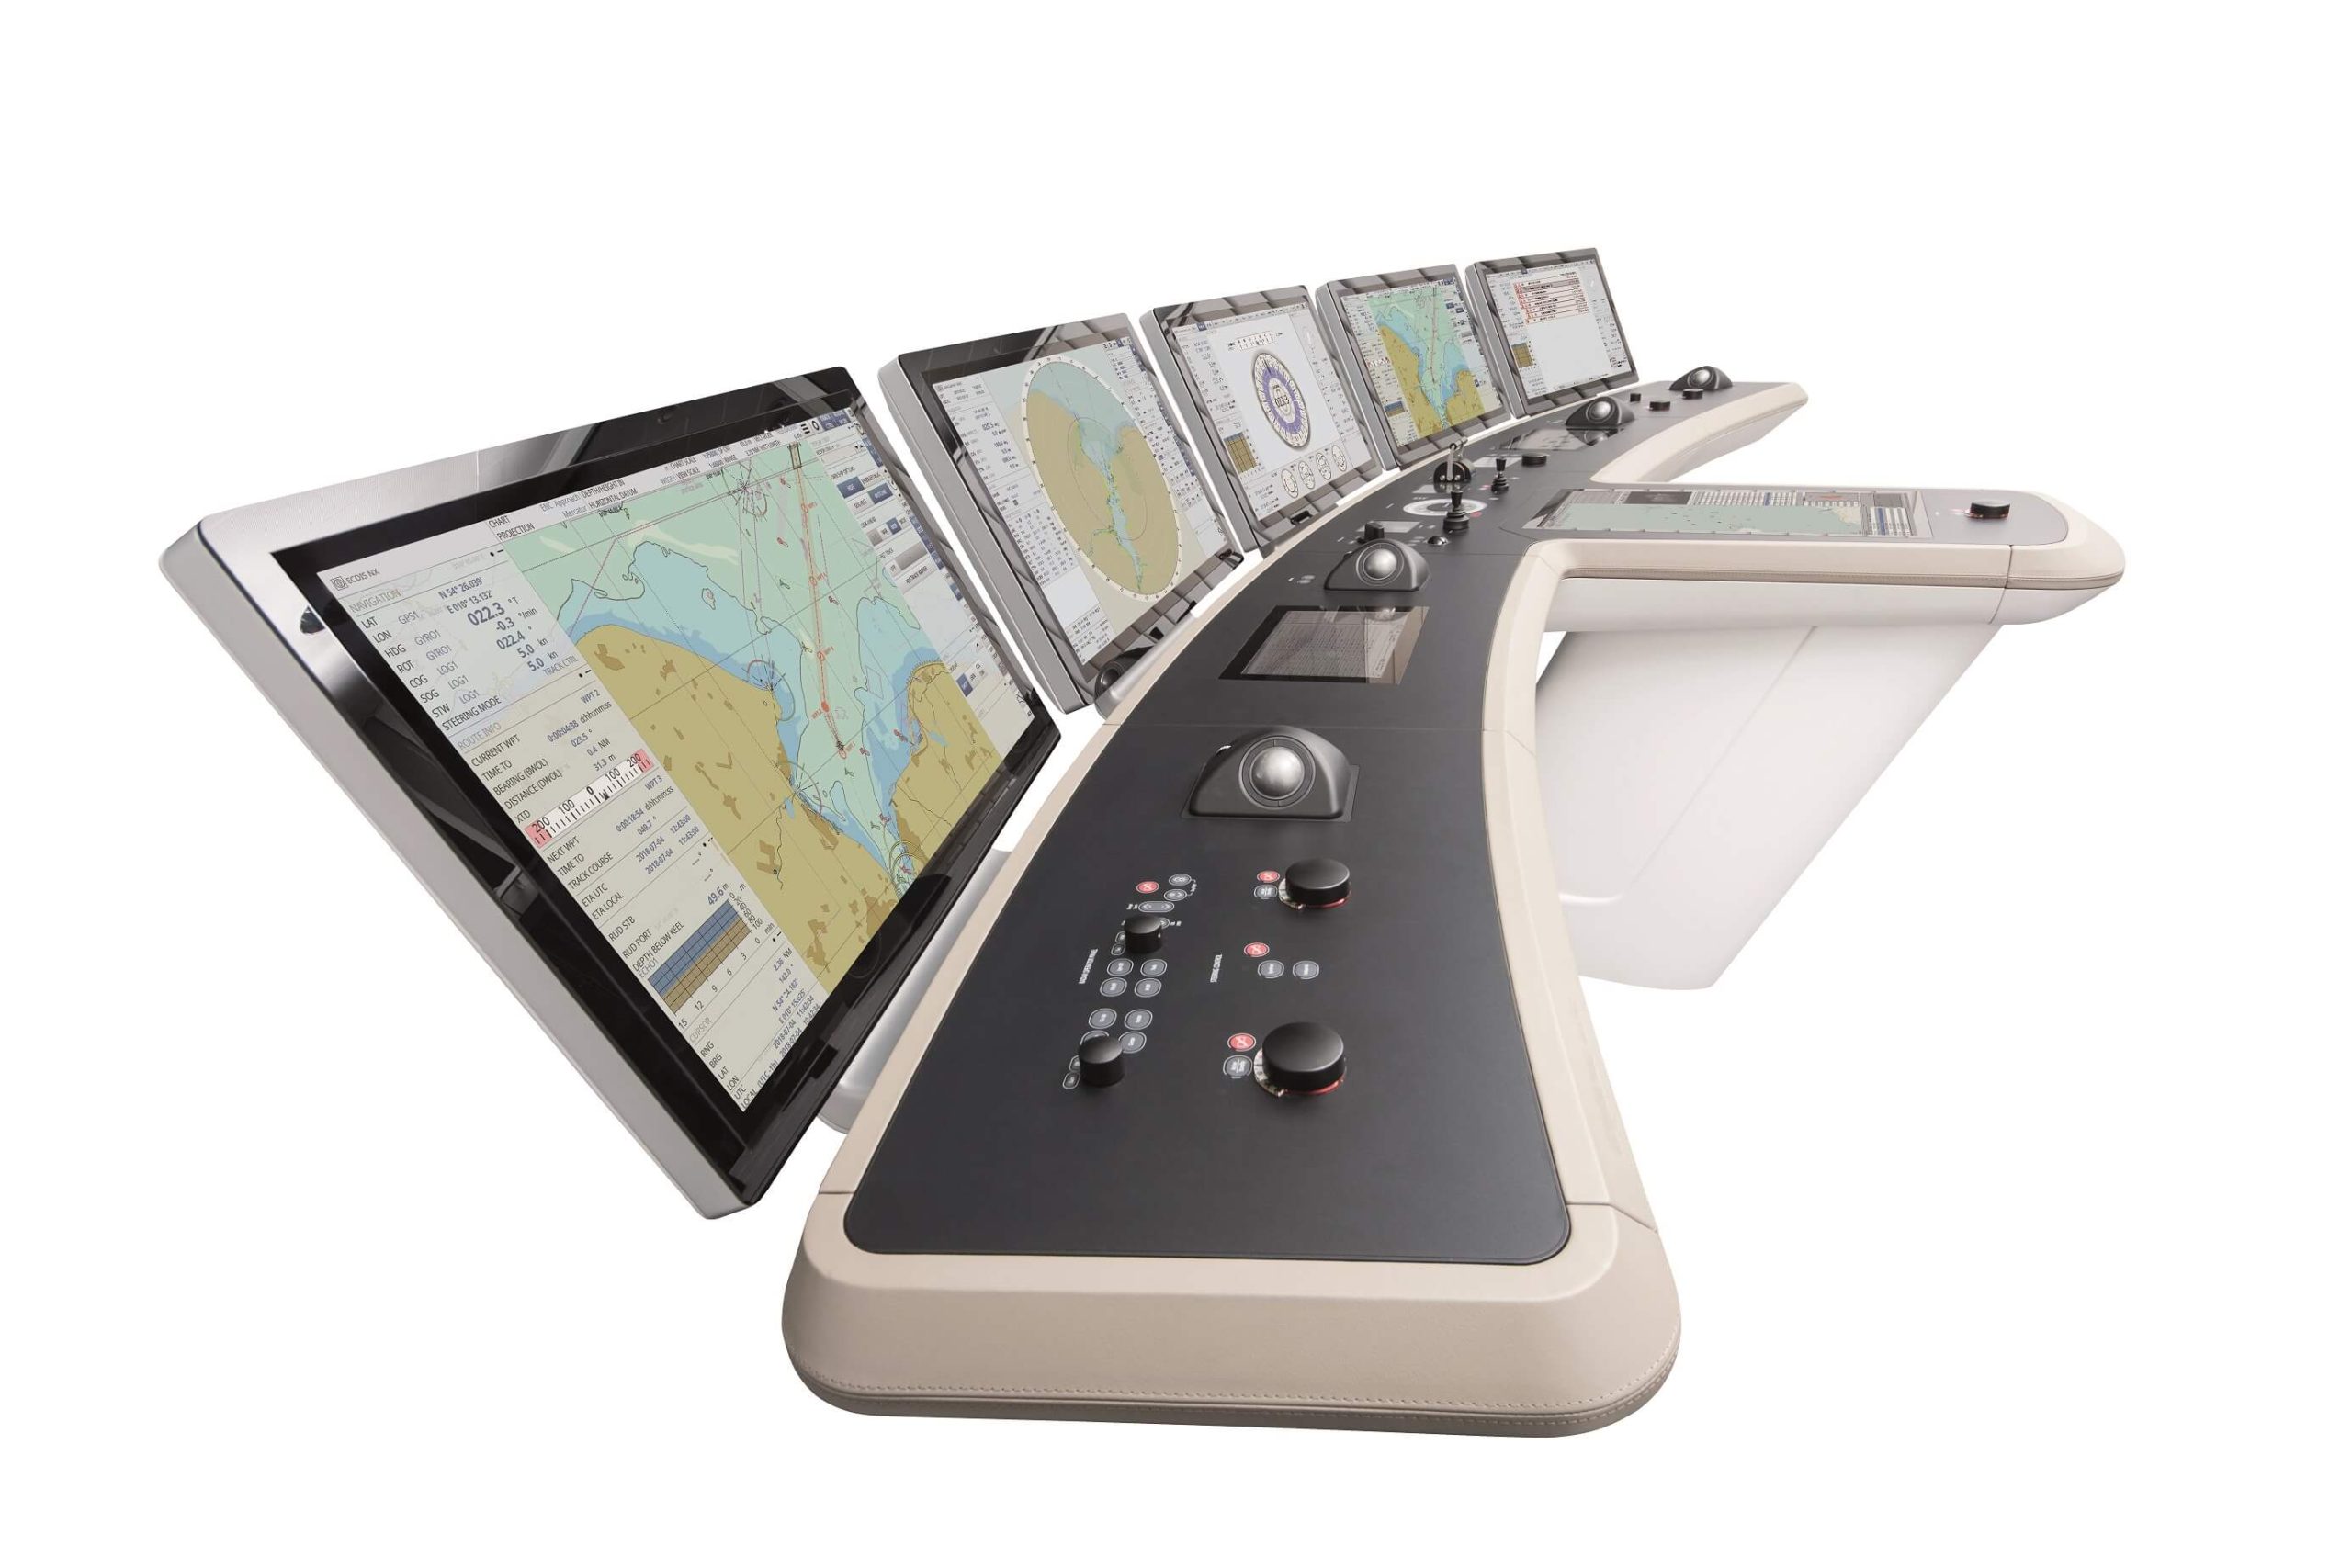 State-of-the-art navigation technology from Kiel